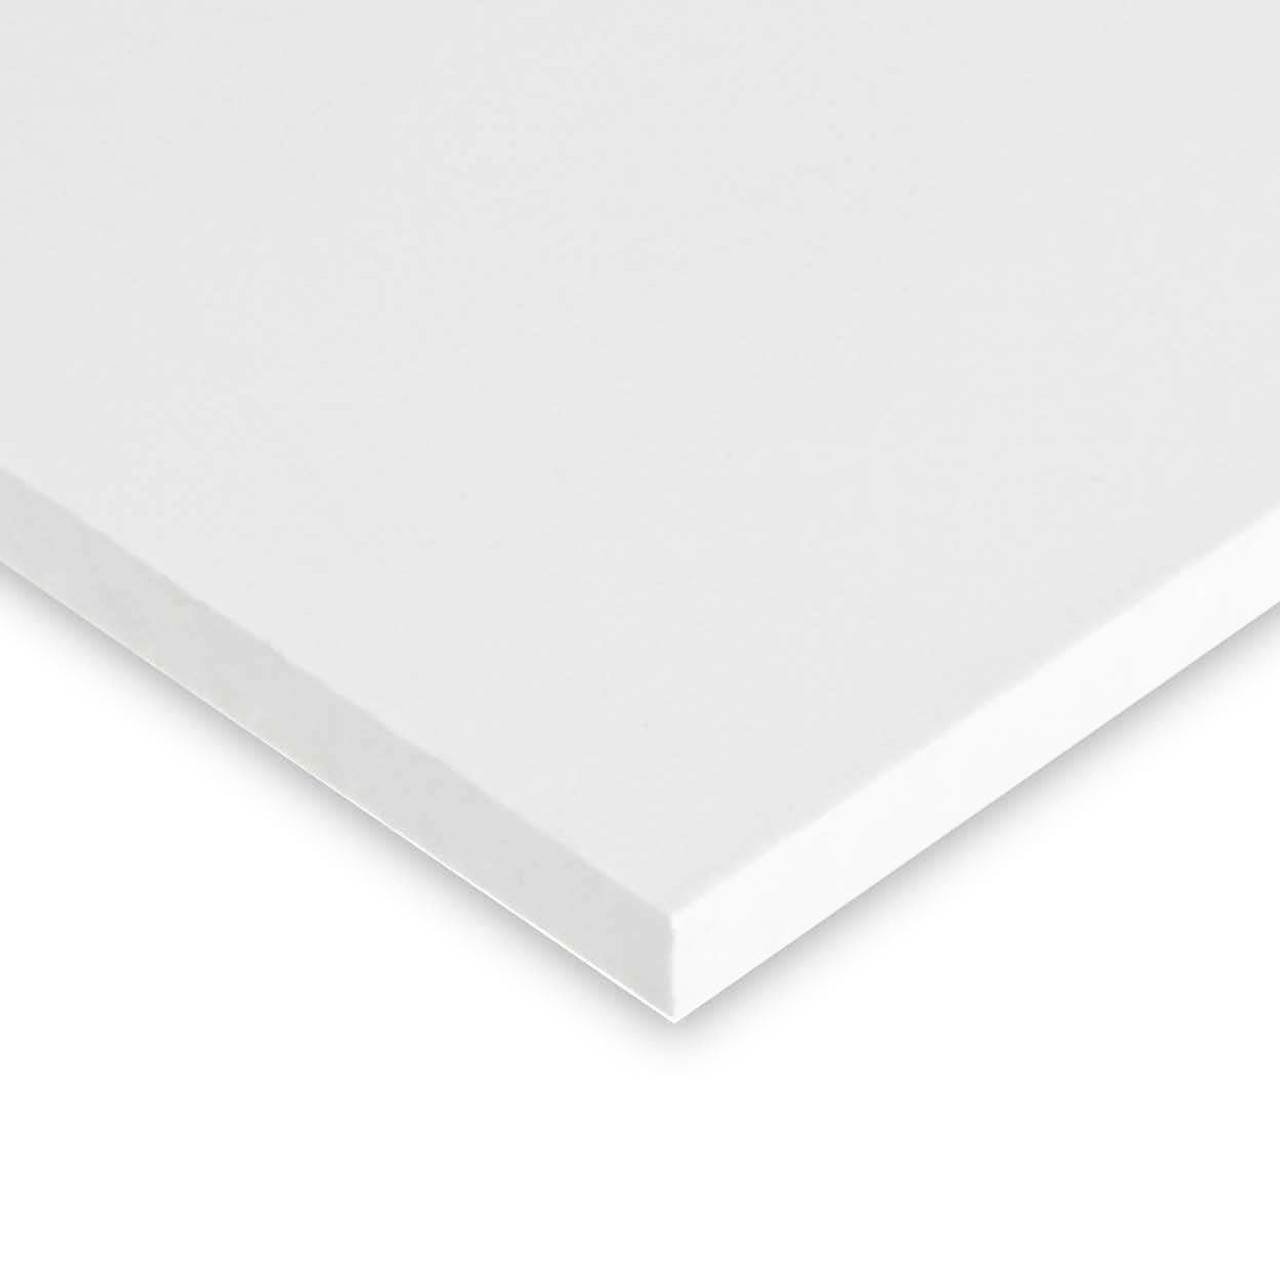 0.472 (1/2 inch) x 24" x 24", PVC Expanded Plastic Sheet, White